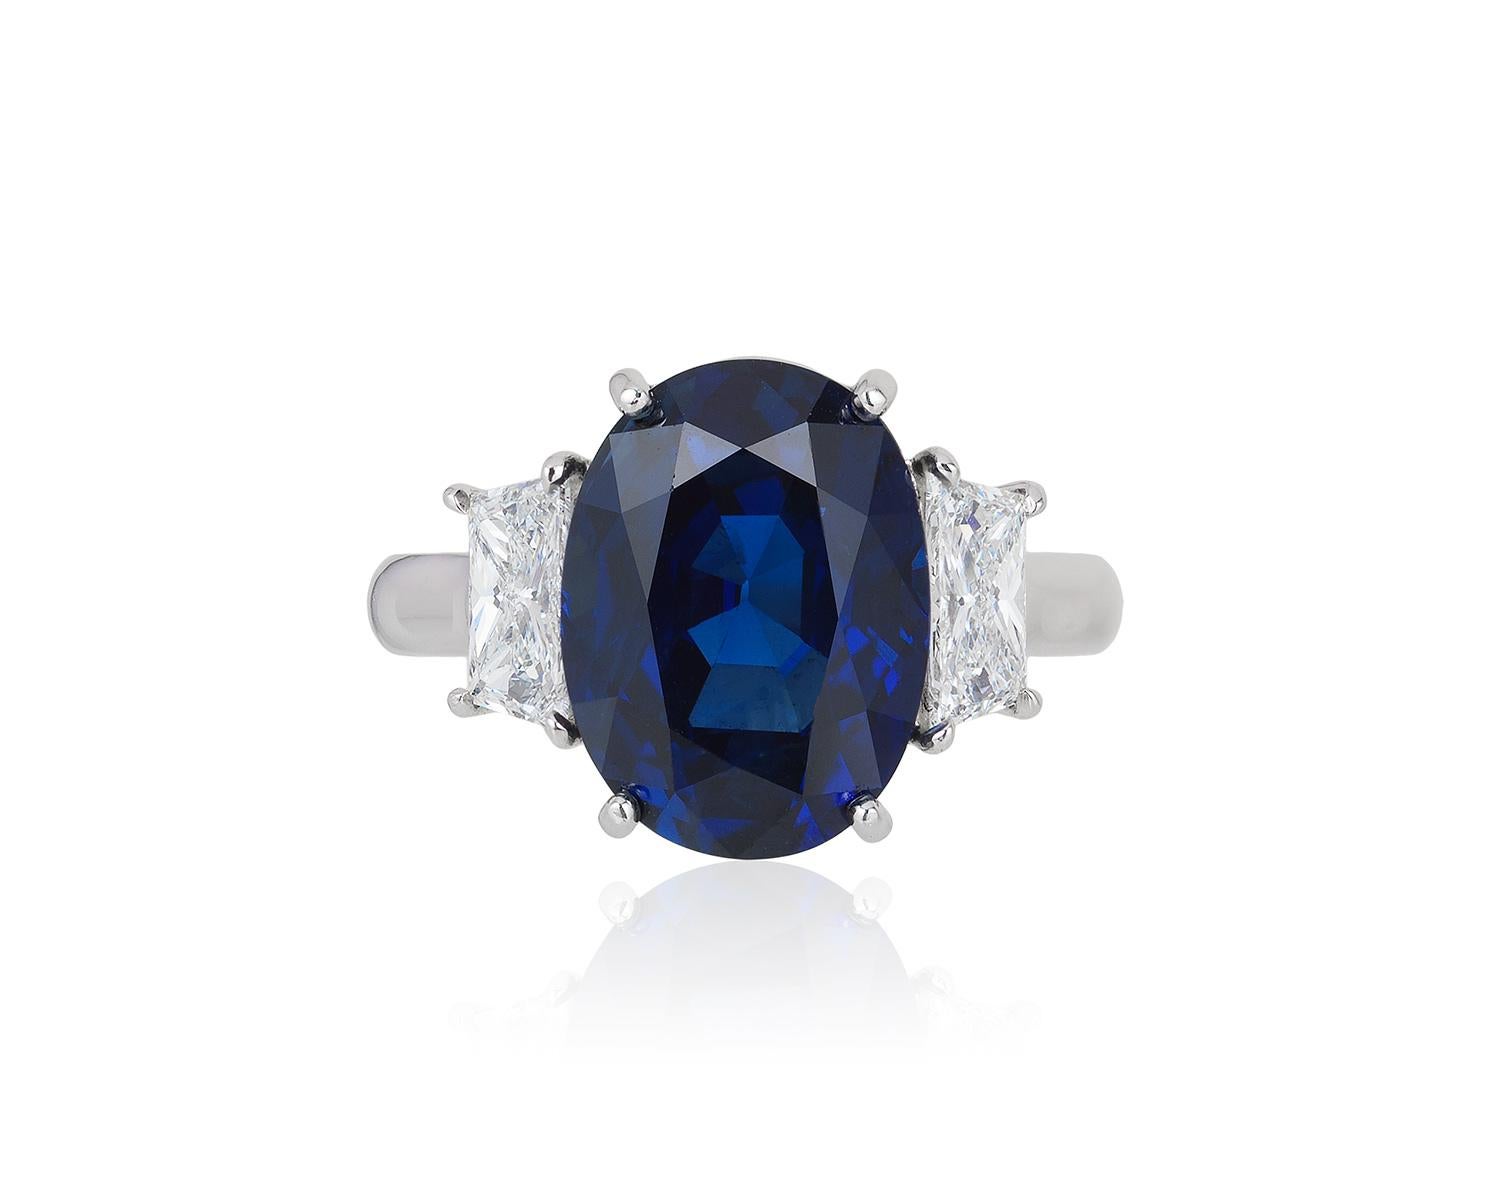 Andreoli 7.74 Carat Sapphire Diamond Platinum Ring GIA Certified

This ring features:
- 1.02 Carat Diamond
- 7.74 Carat Sapphire
- Platinum
- Made In Italy